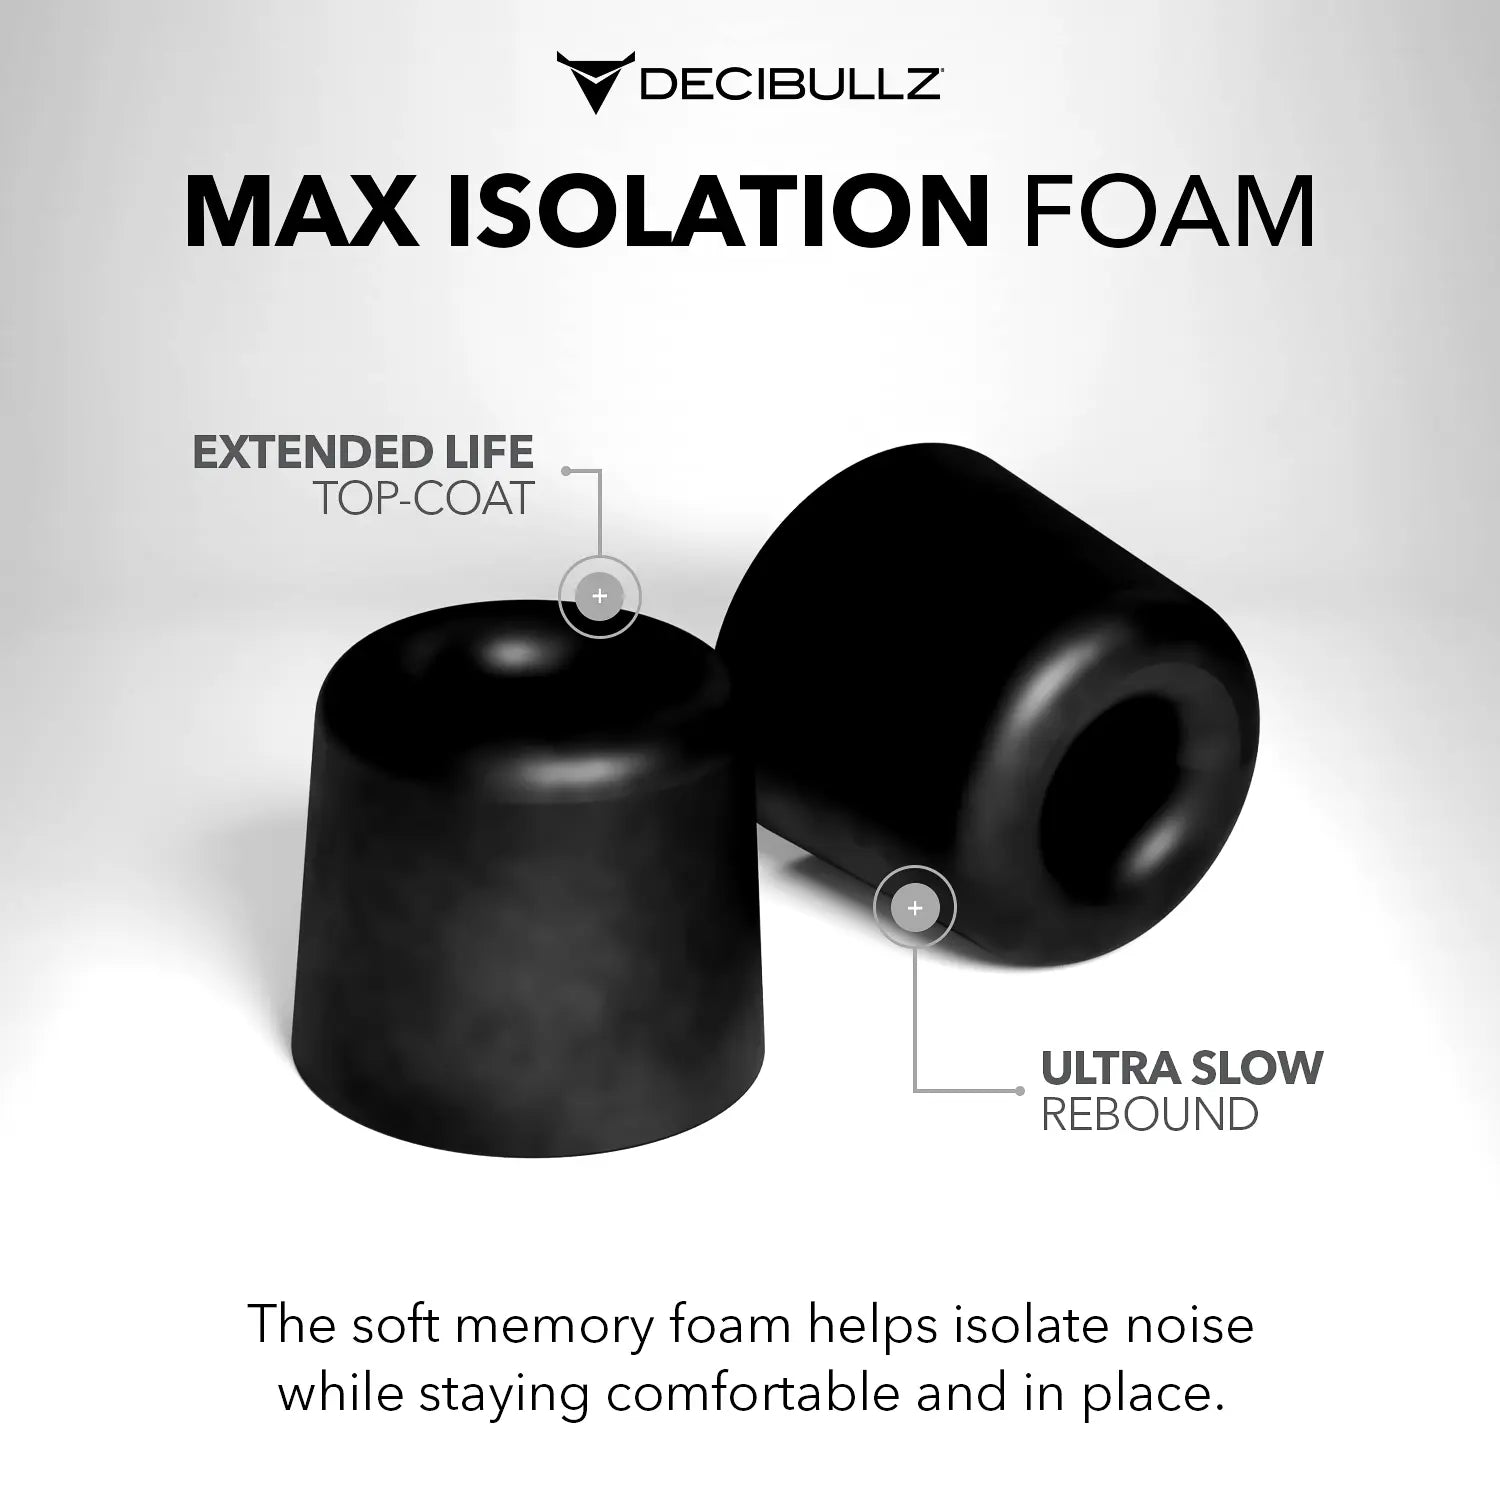 Replacement Foam Tips for Decibullz Custom Molded Earpieces and Earplugs